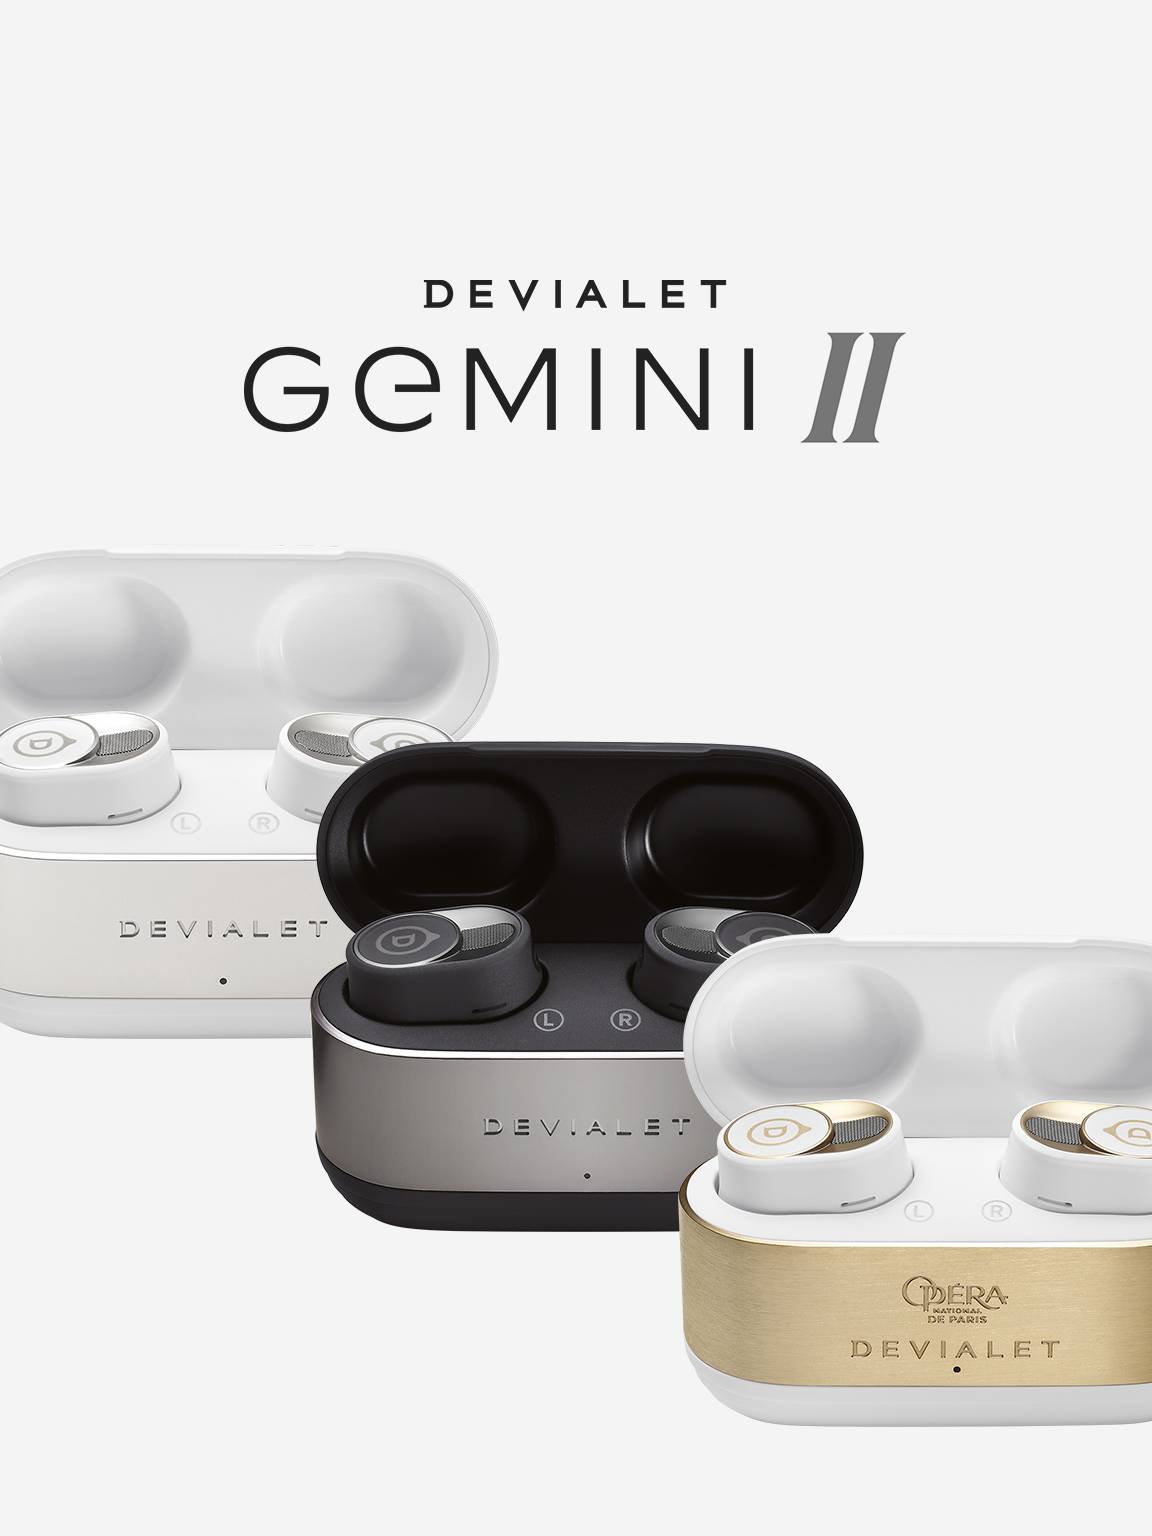 Devialet Gemini II - High-End Wireless Earbuds